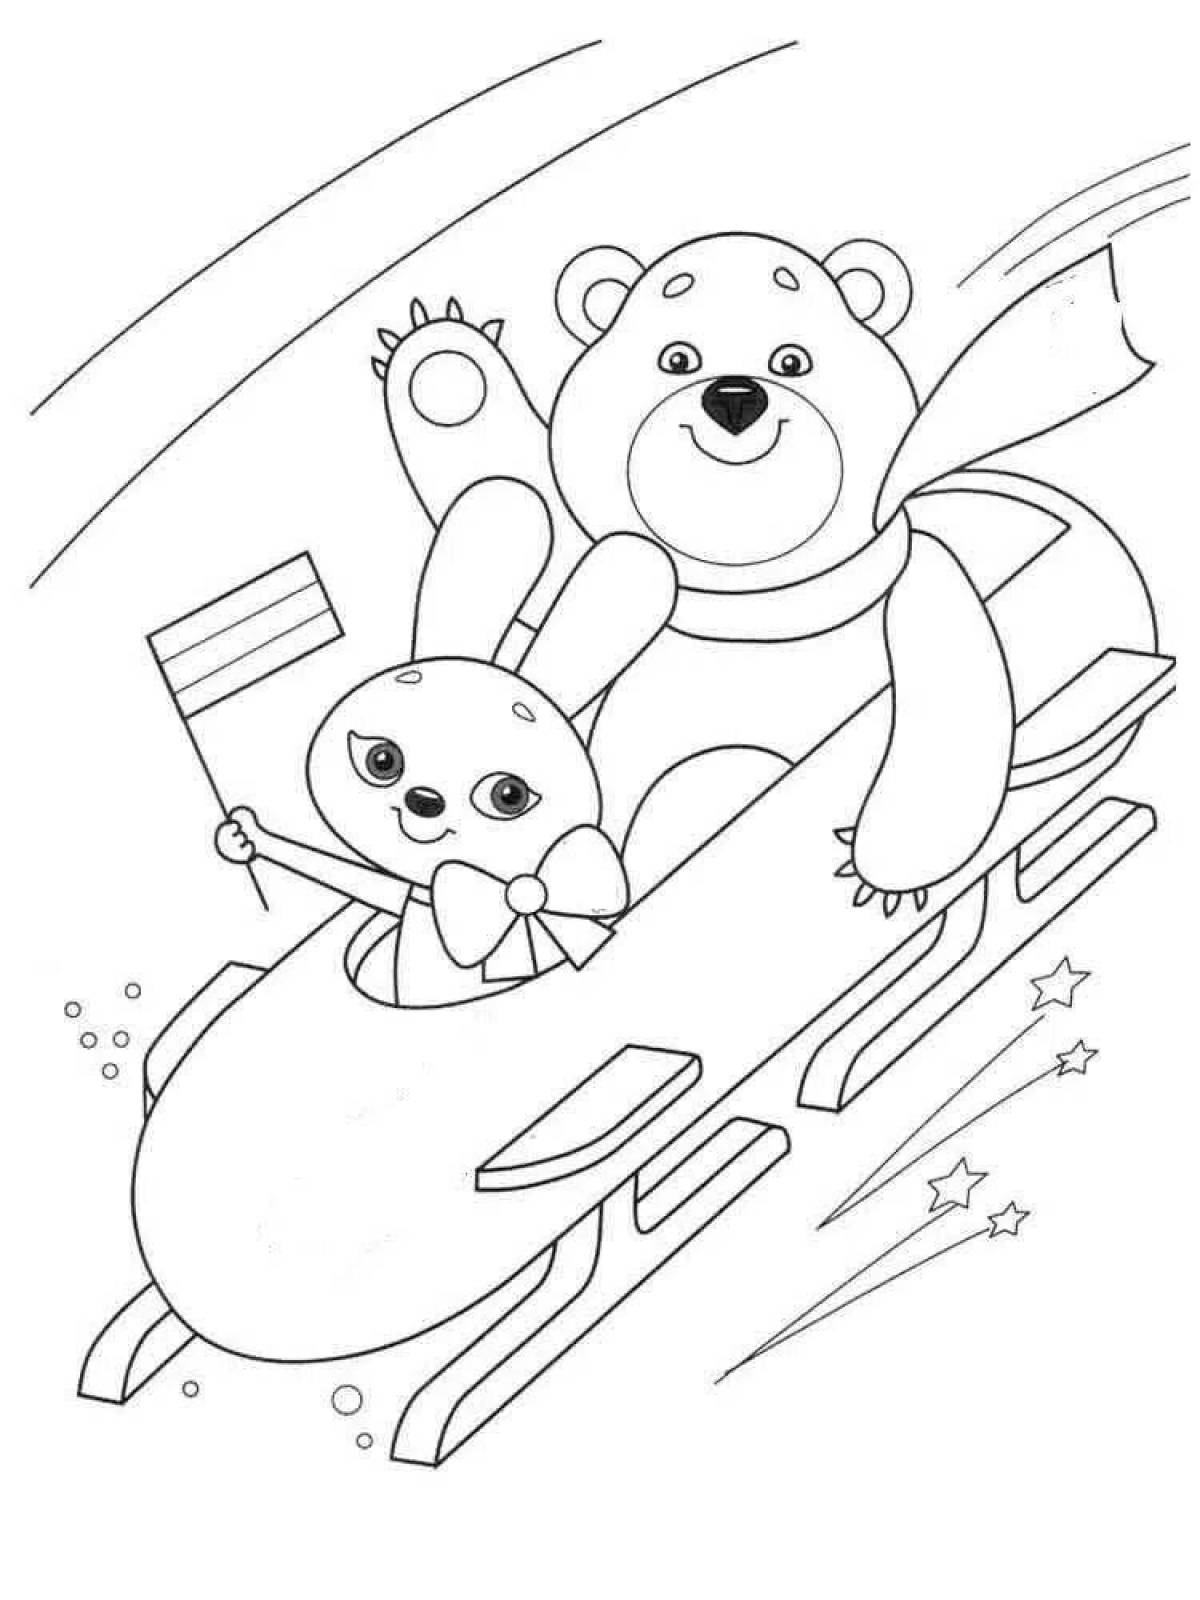 Coloring page charming Sochi